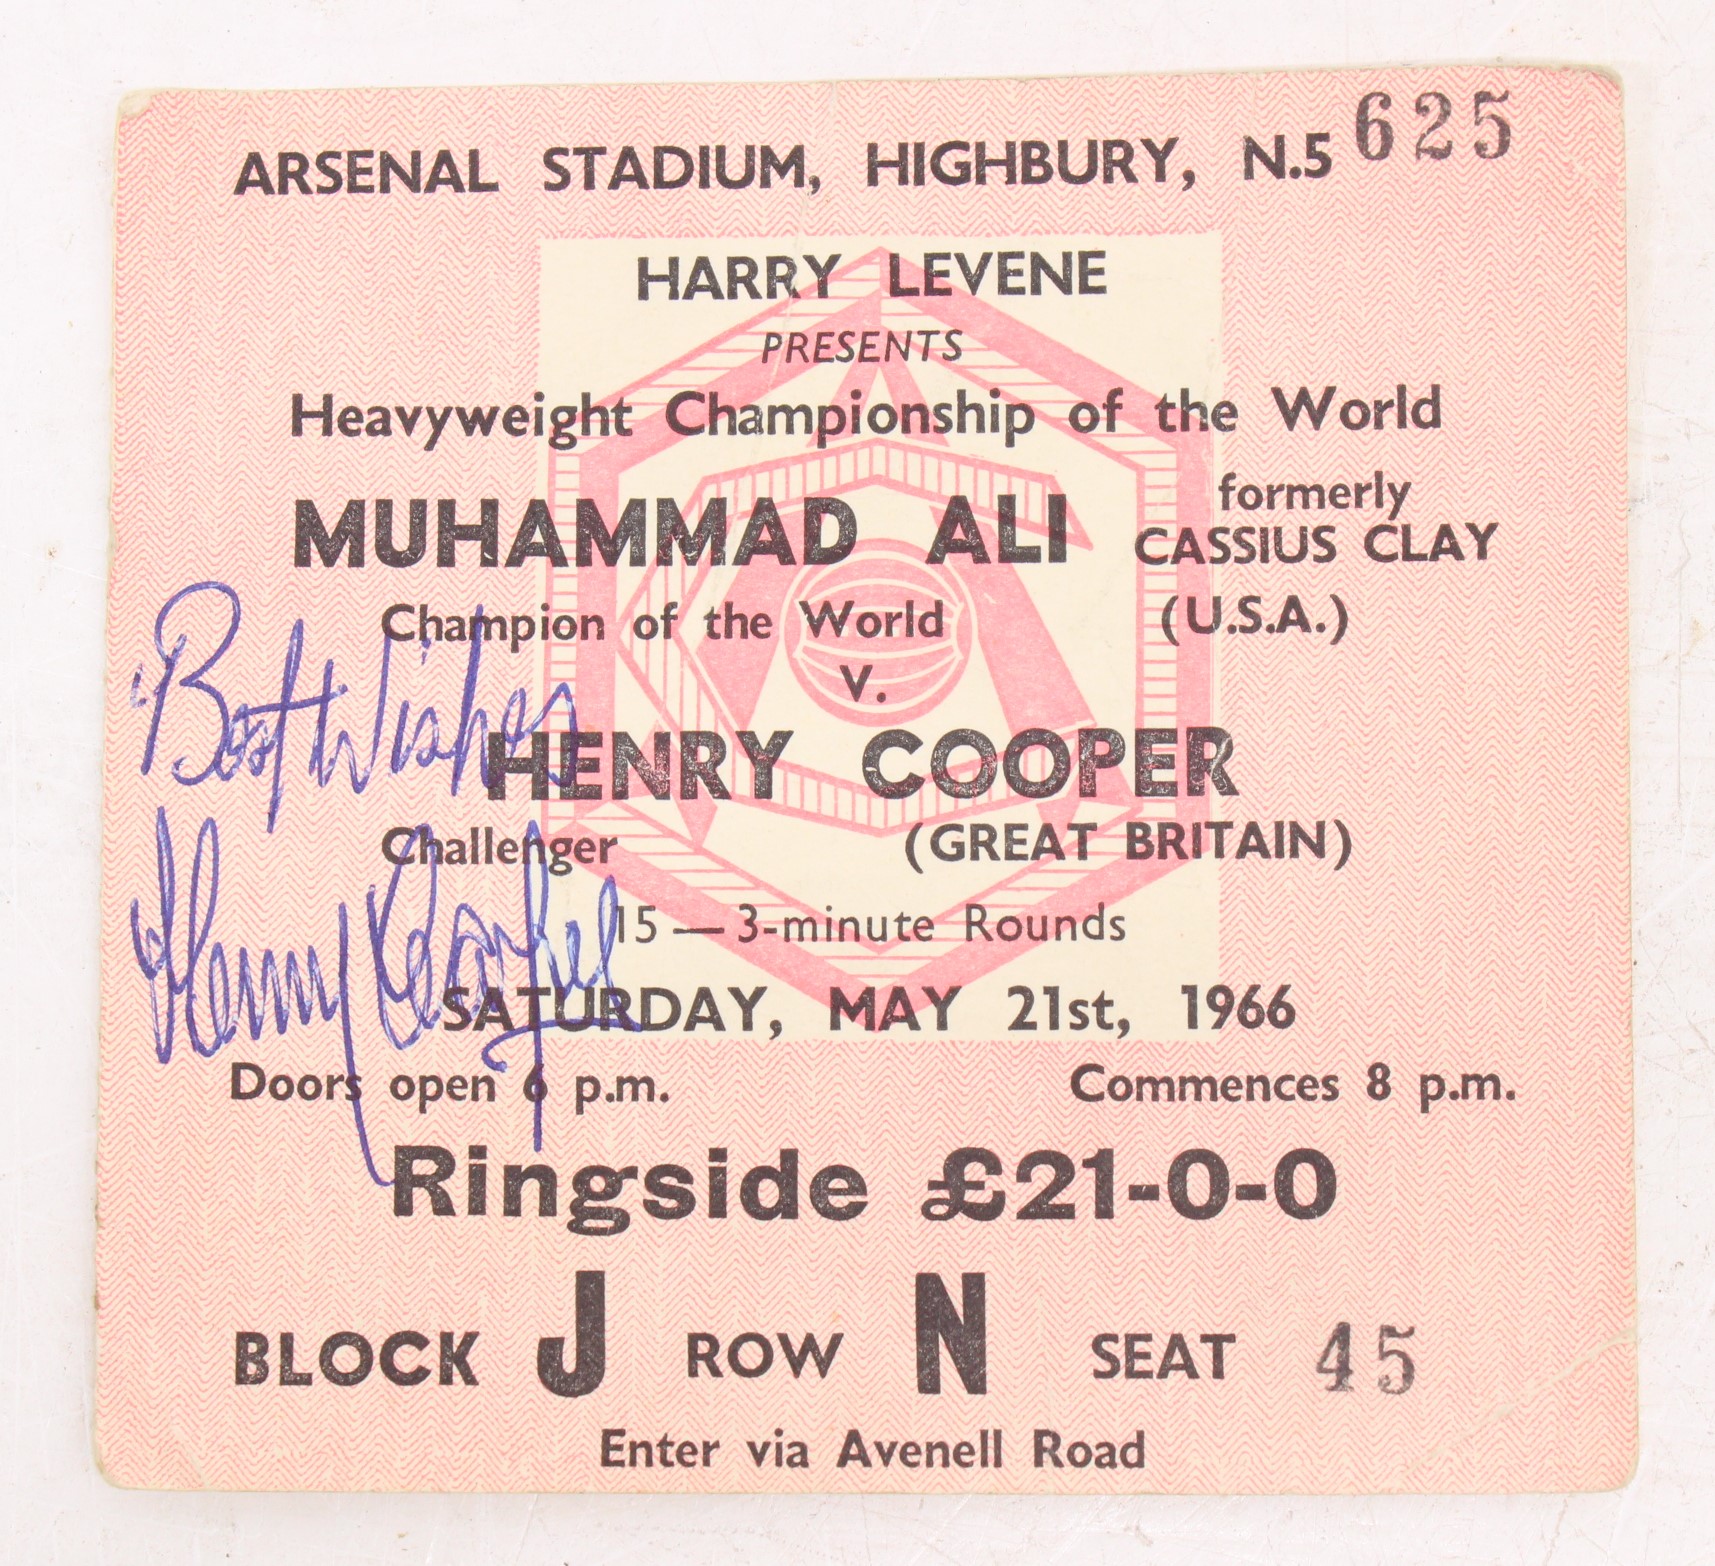 Boxing: A pair of Muhammad Ali v. Henry Cooper, 21st May 1966, Arsenal Stadium, Highbury, Ringside - Image 2 of 4